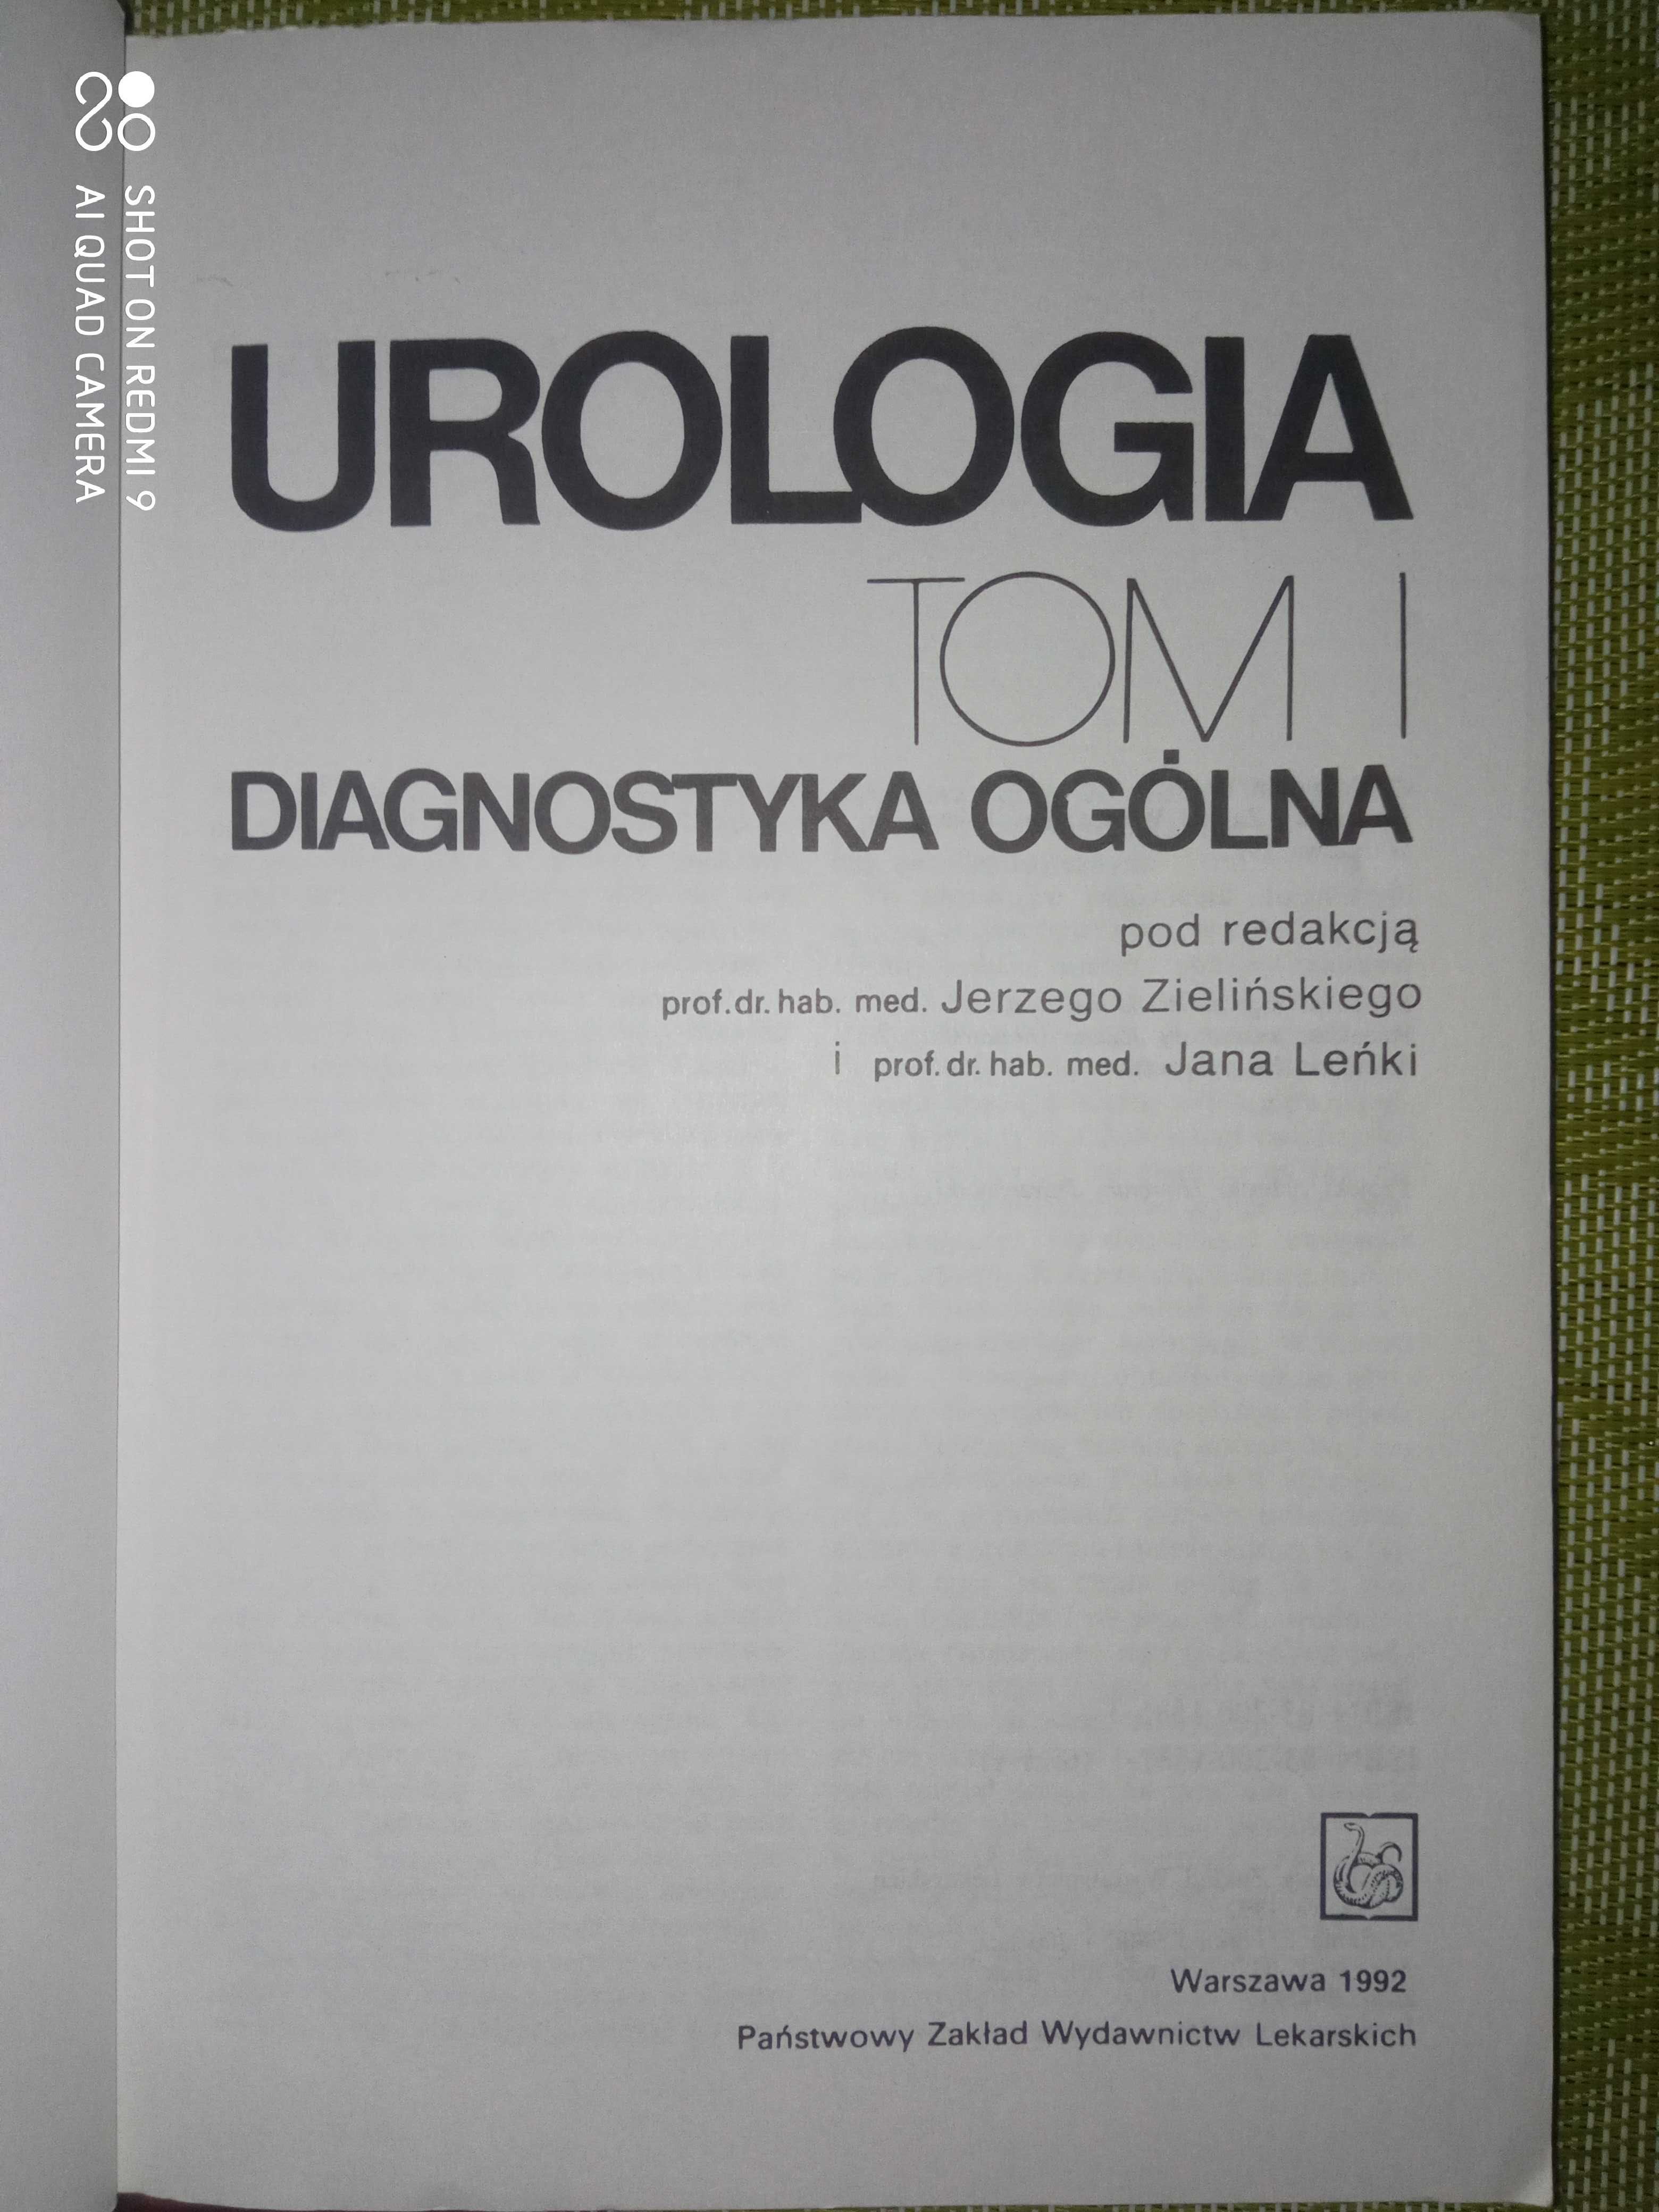 Urologia diagnostyka ogólna tom 1